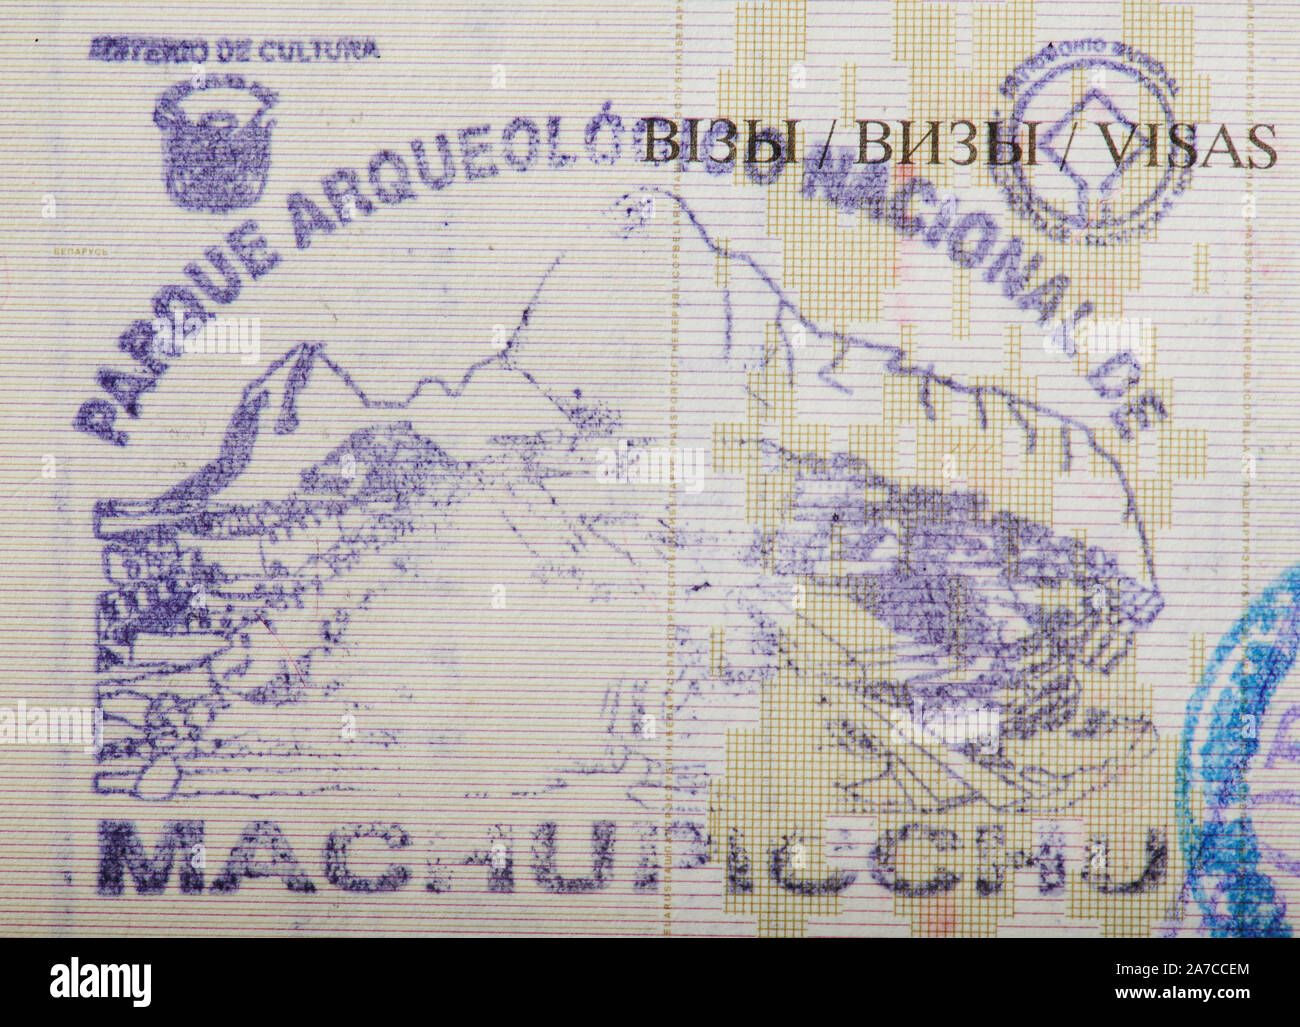 Sello de Machu Picchu en la página del pasaporte vista cercana Foto de stock